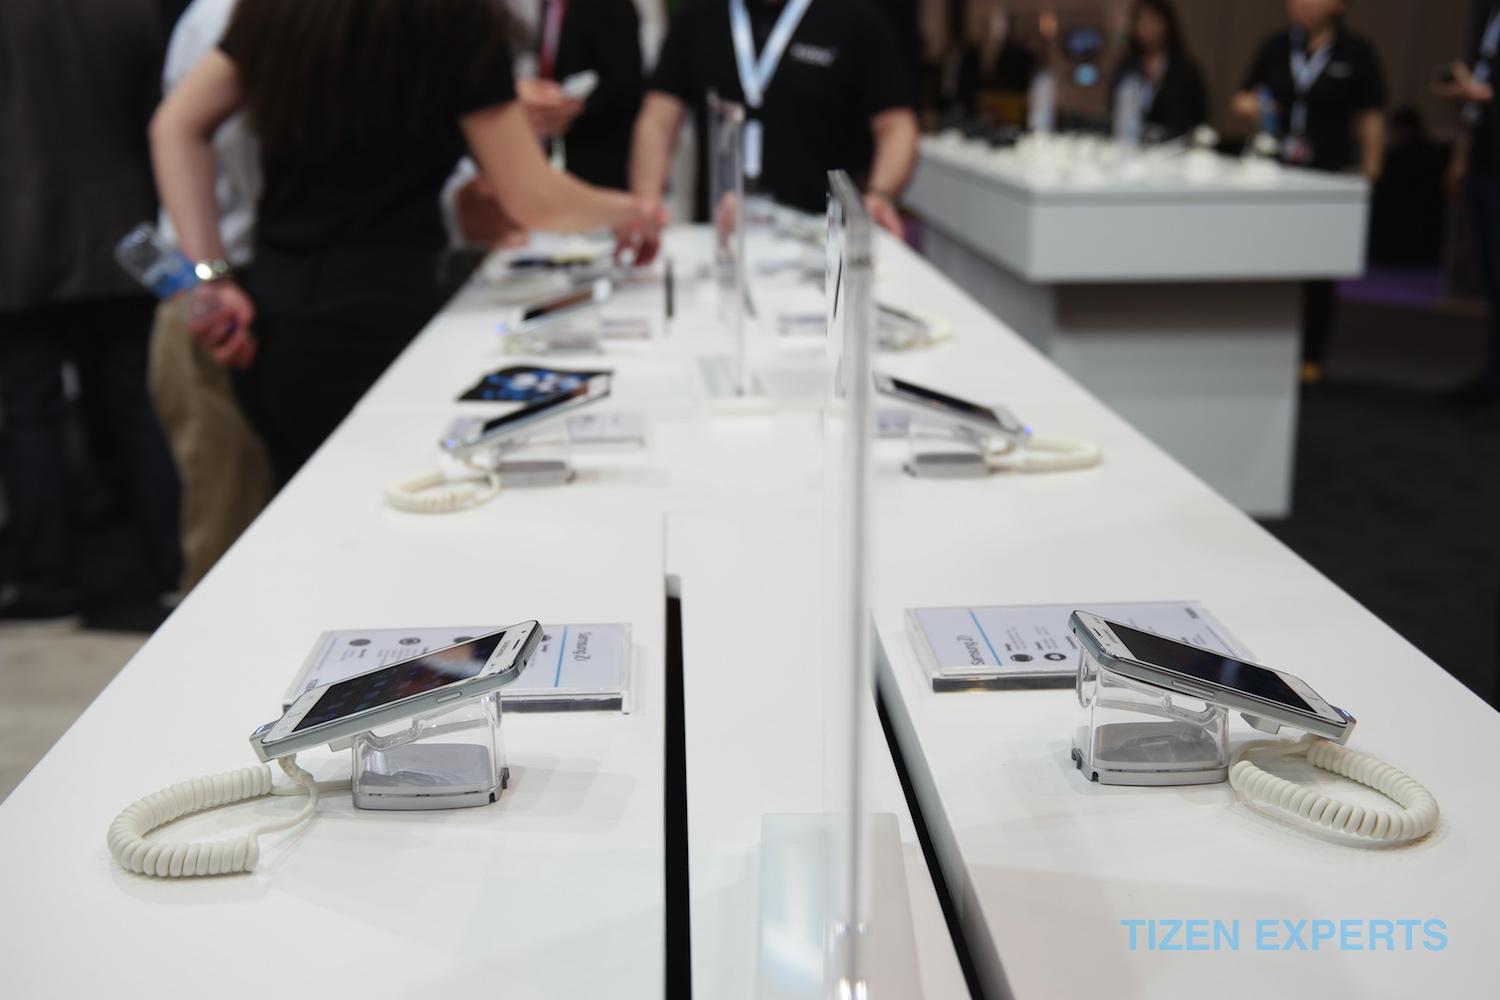 Samsung Z1 at mobile world congress 2015